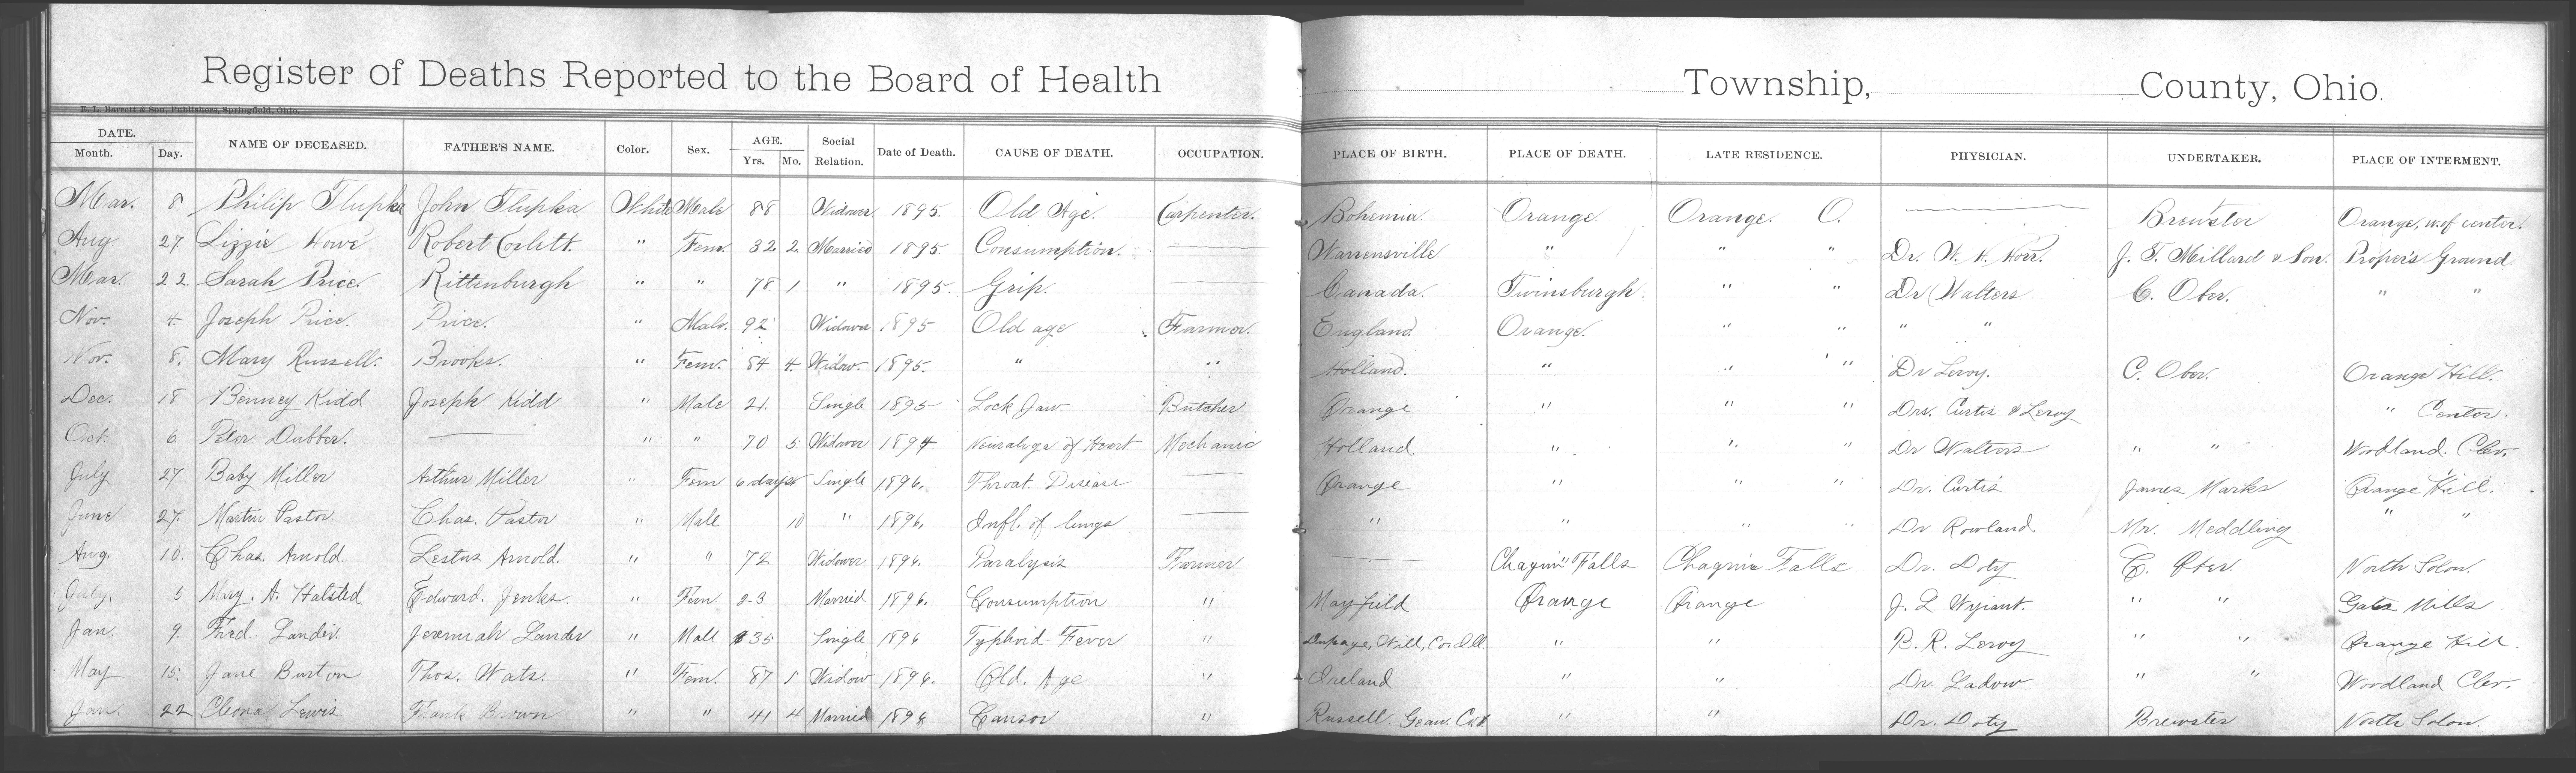 Birth Death Records Moreland Hills Historical Society